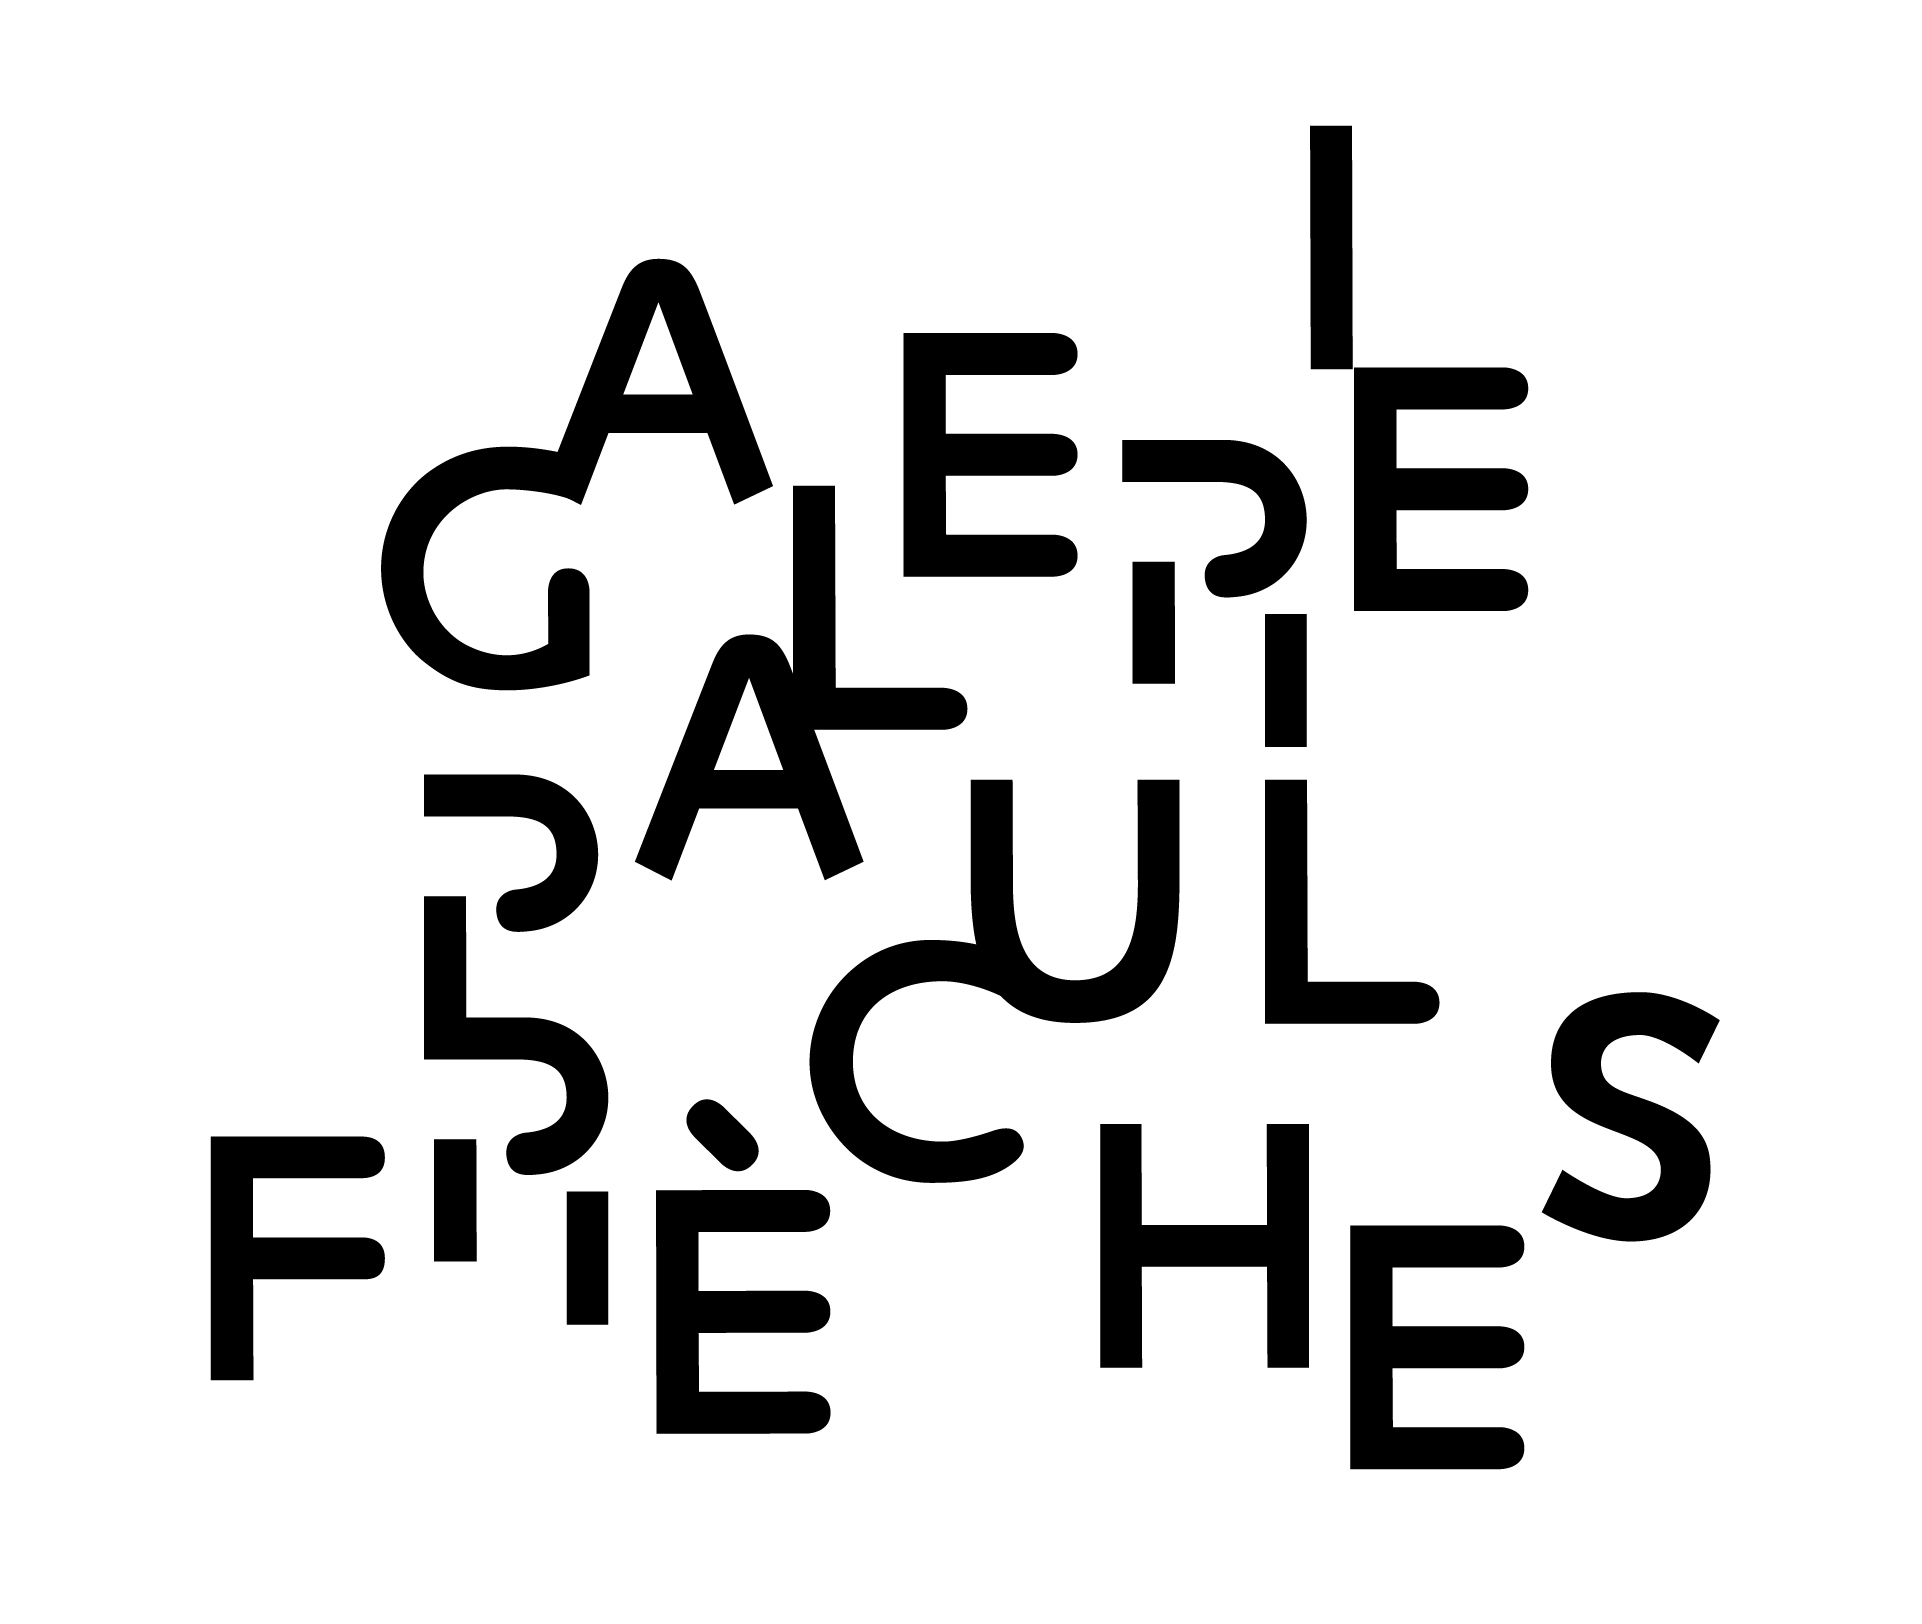 Gallerie Paul Freches, 2012